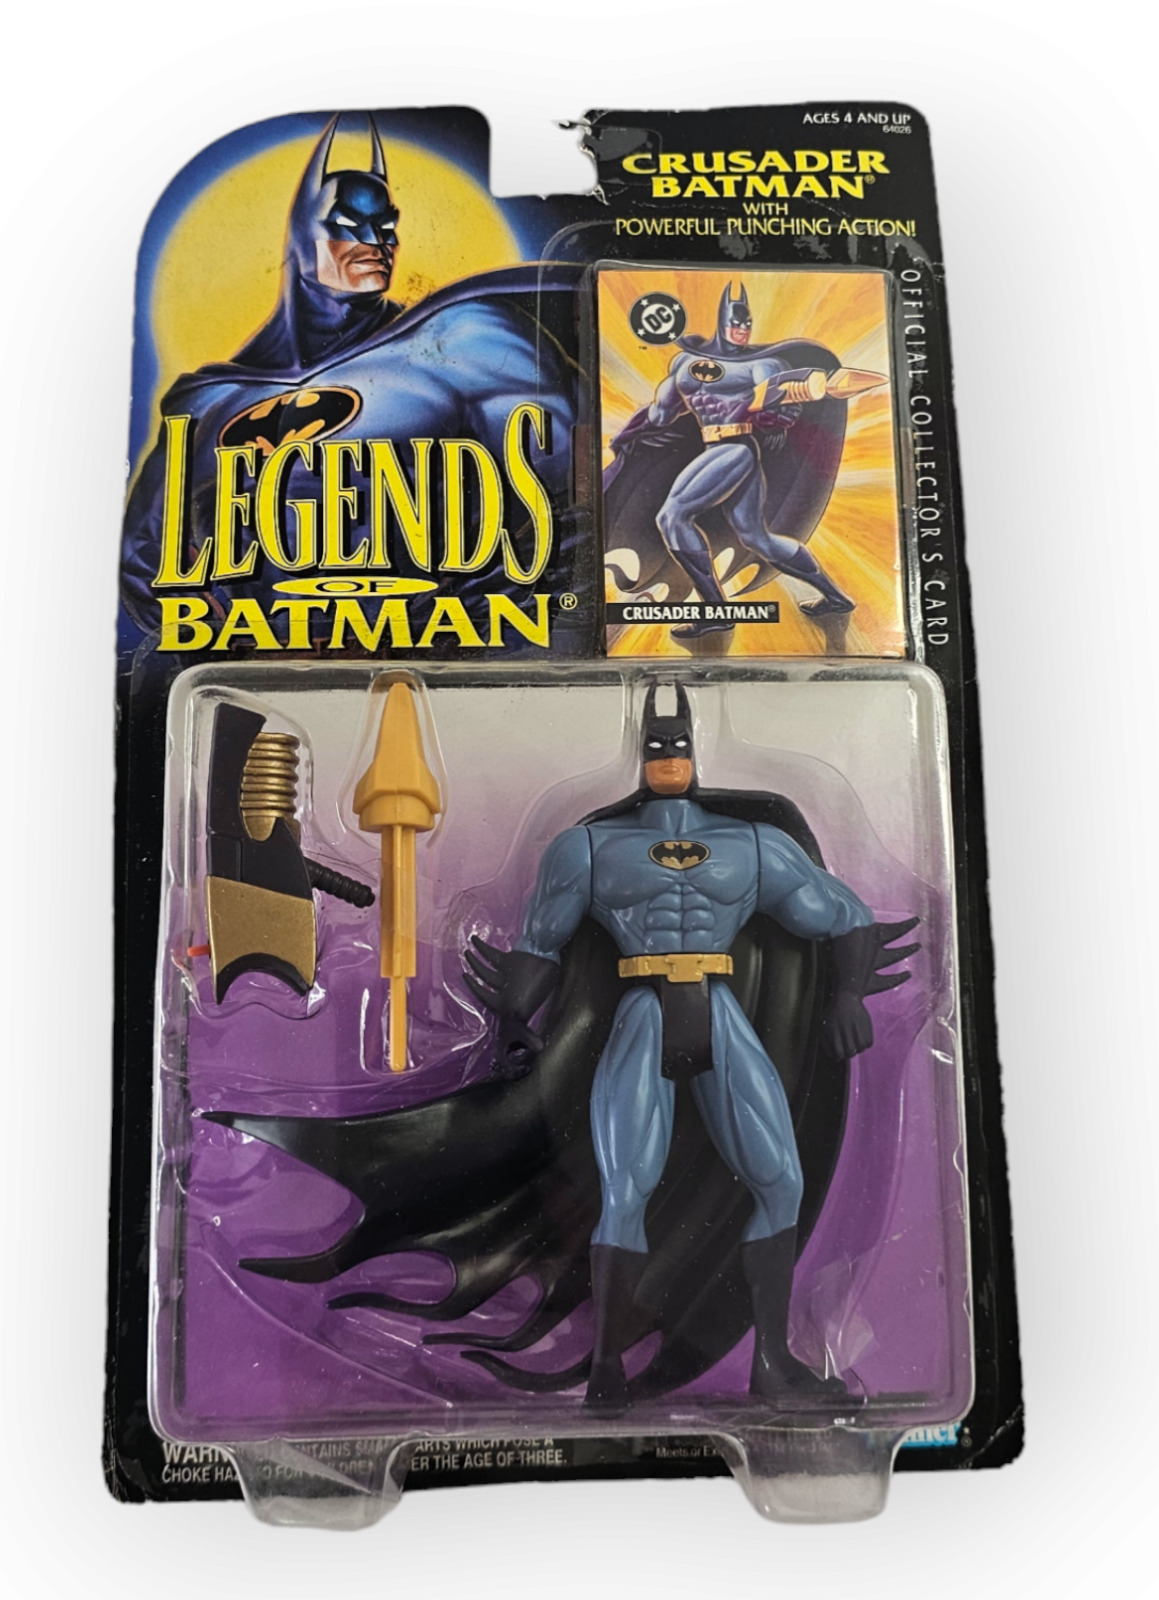 Kenner Legends of Batman Crusader Batman-In Original Packaging-Minor Damage